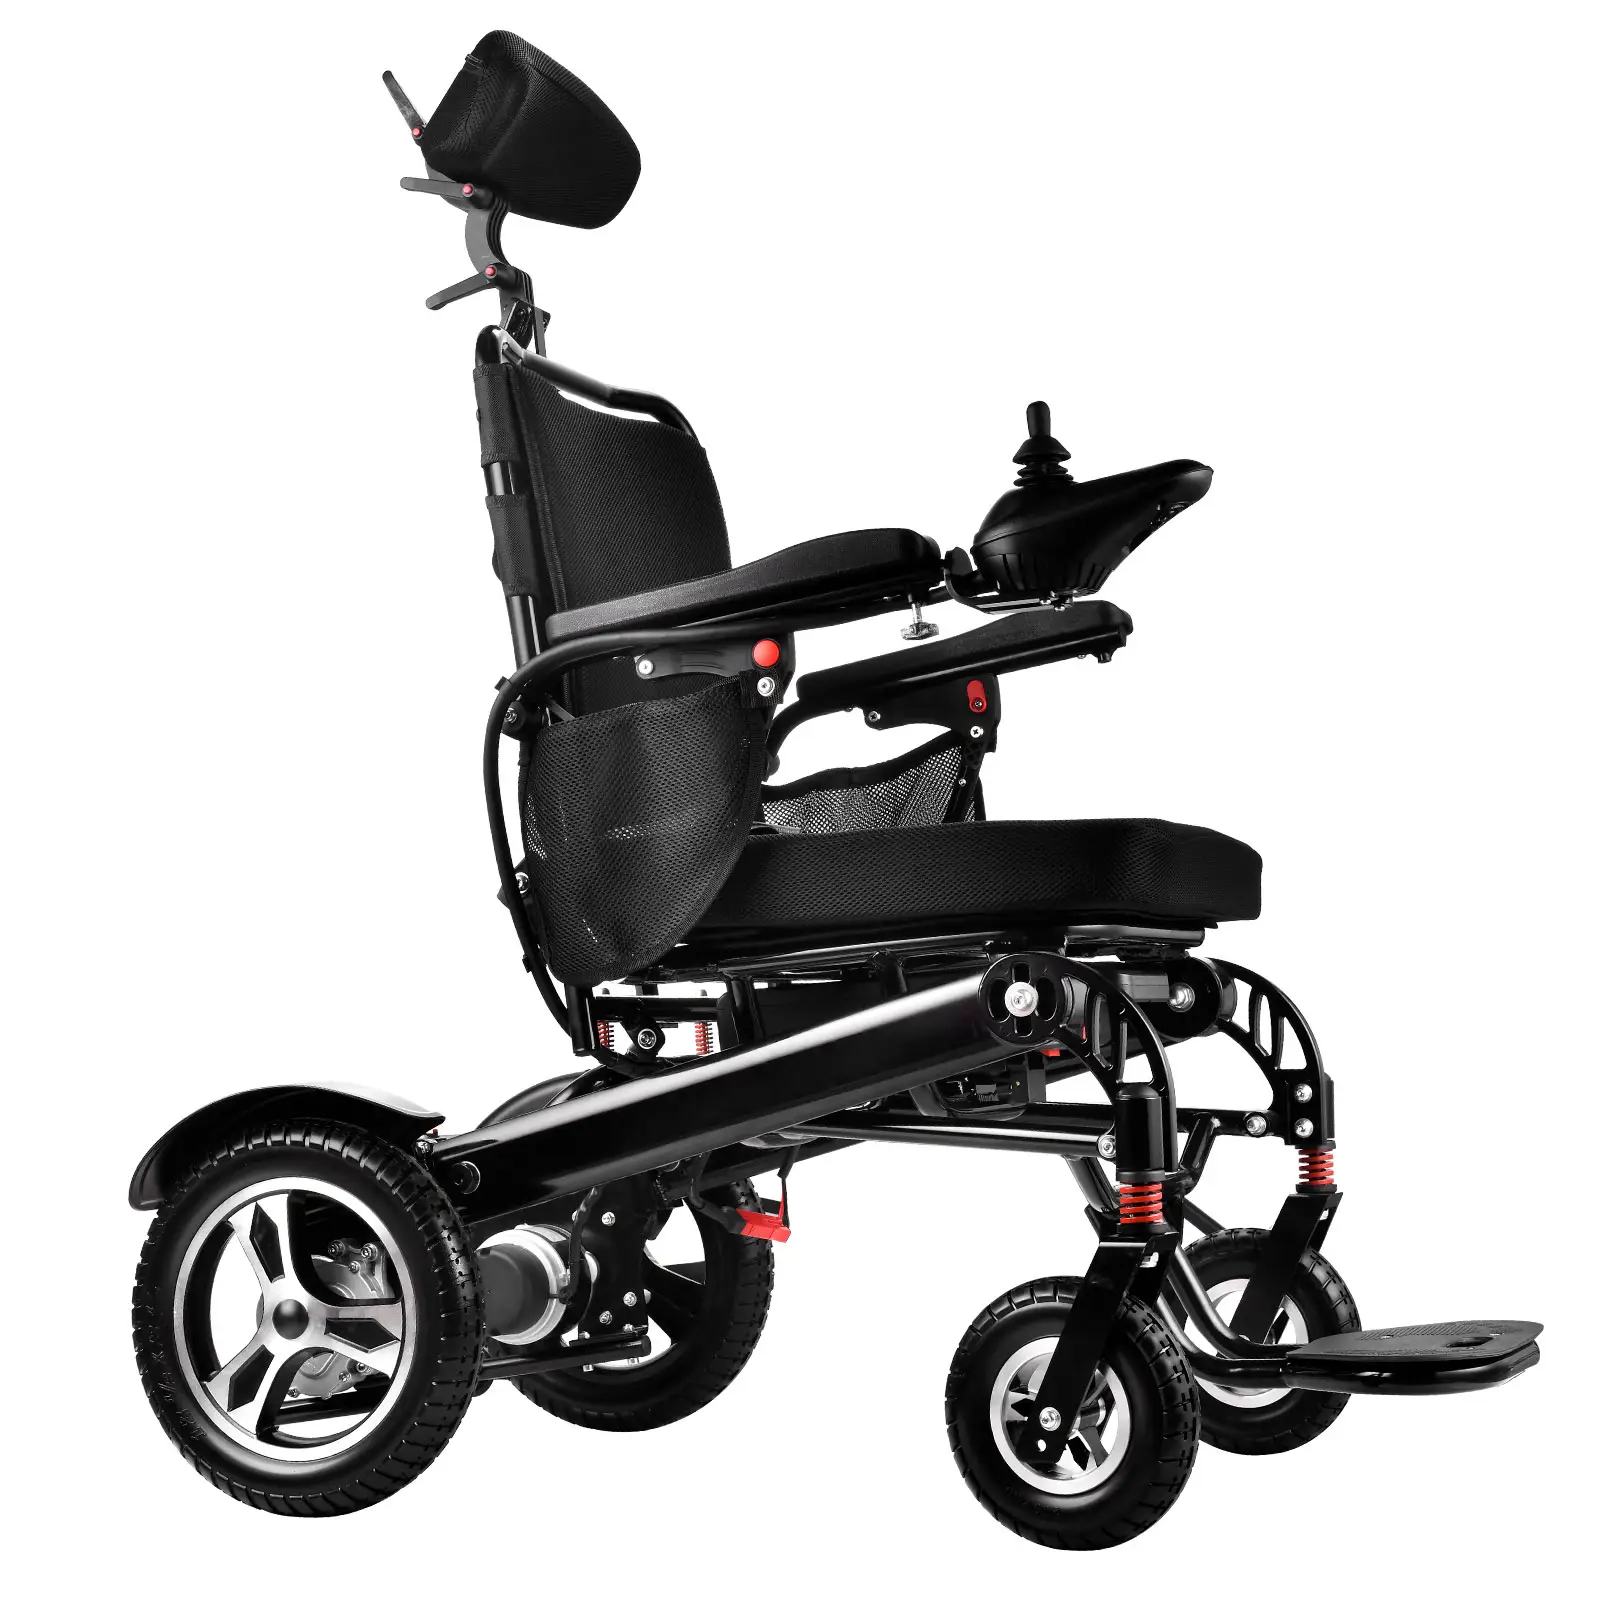 Factory design All Terrain Electric Wheelchair Aluminum Lightweight Folding Portable Remote Control Travel Cheap Wheelchair